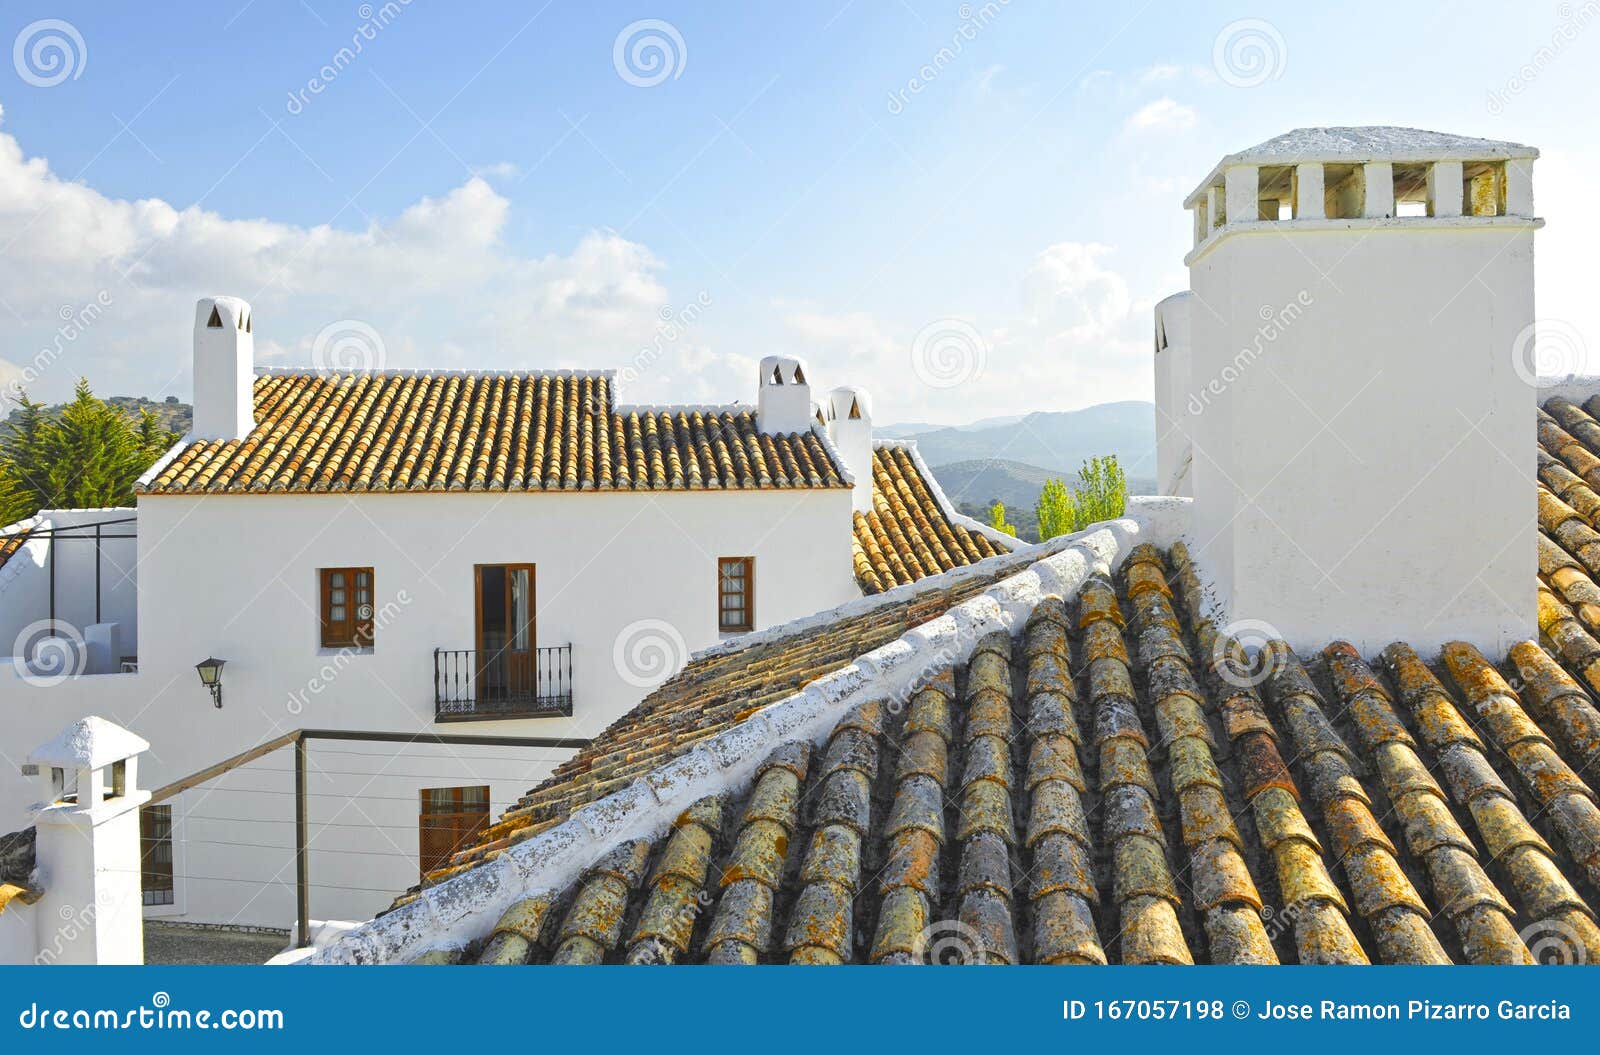 andalusian rooftops in the tourist villa of zagrilla village near the town of priego de cordoba, spain